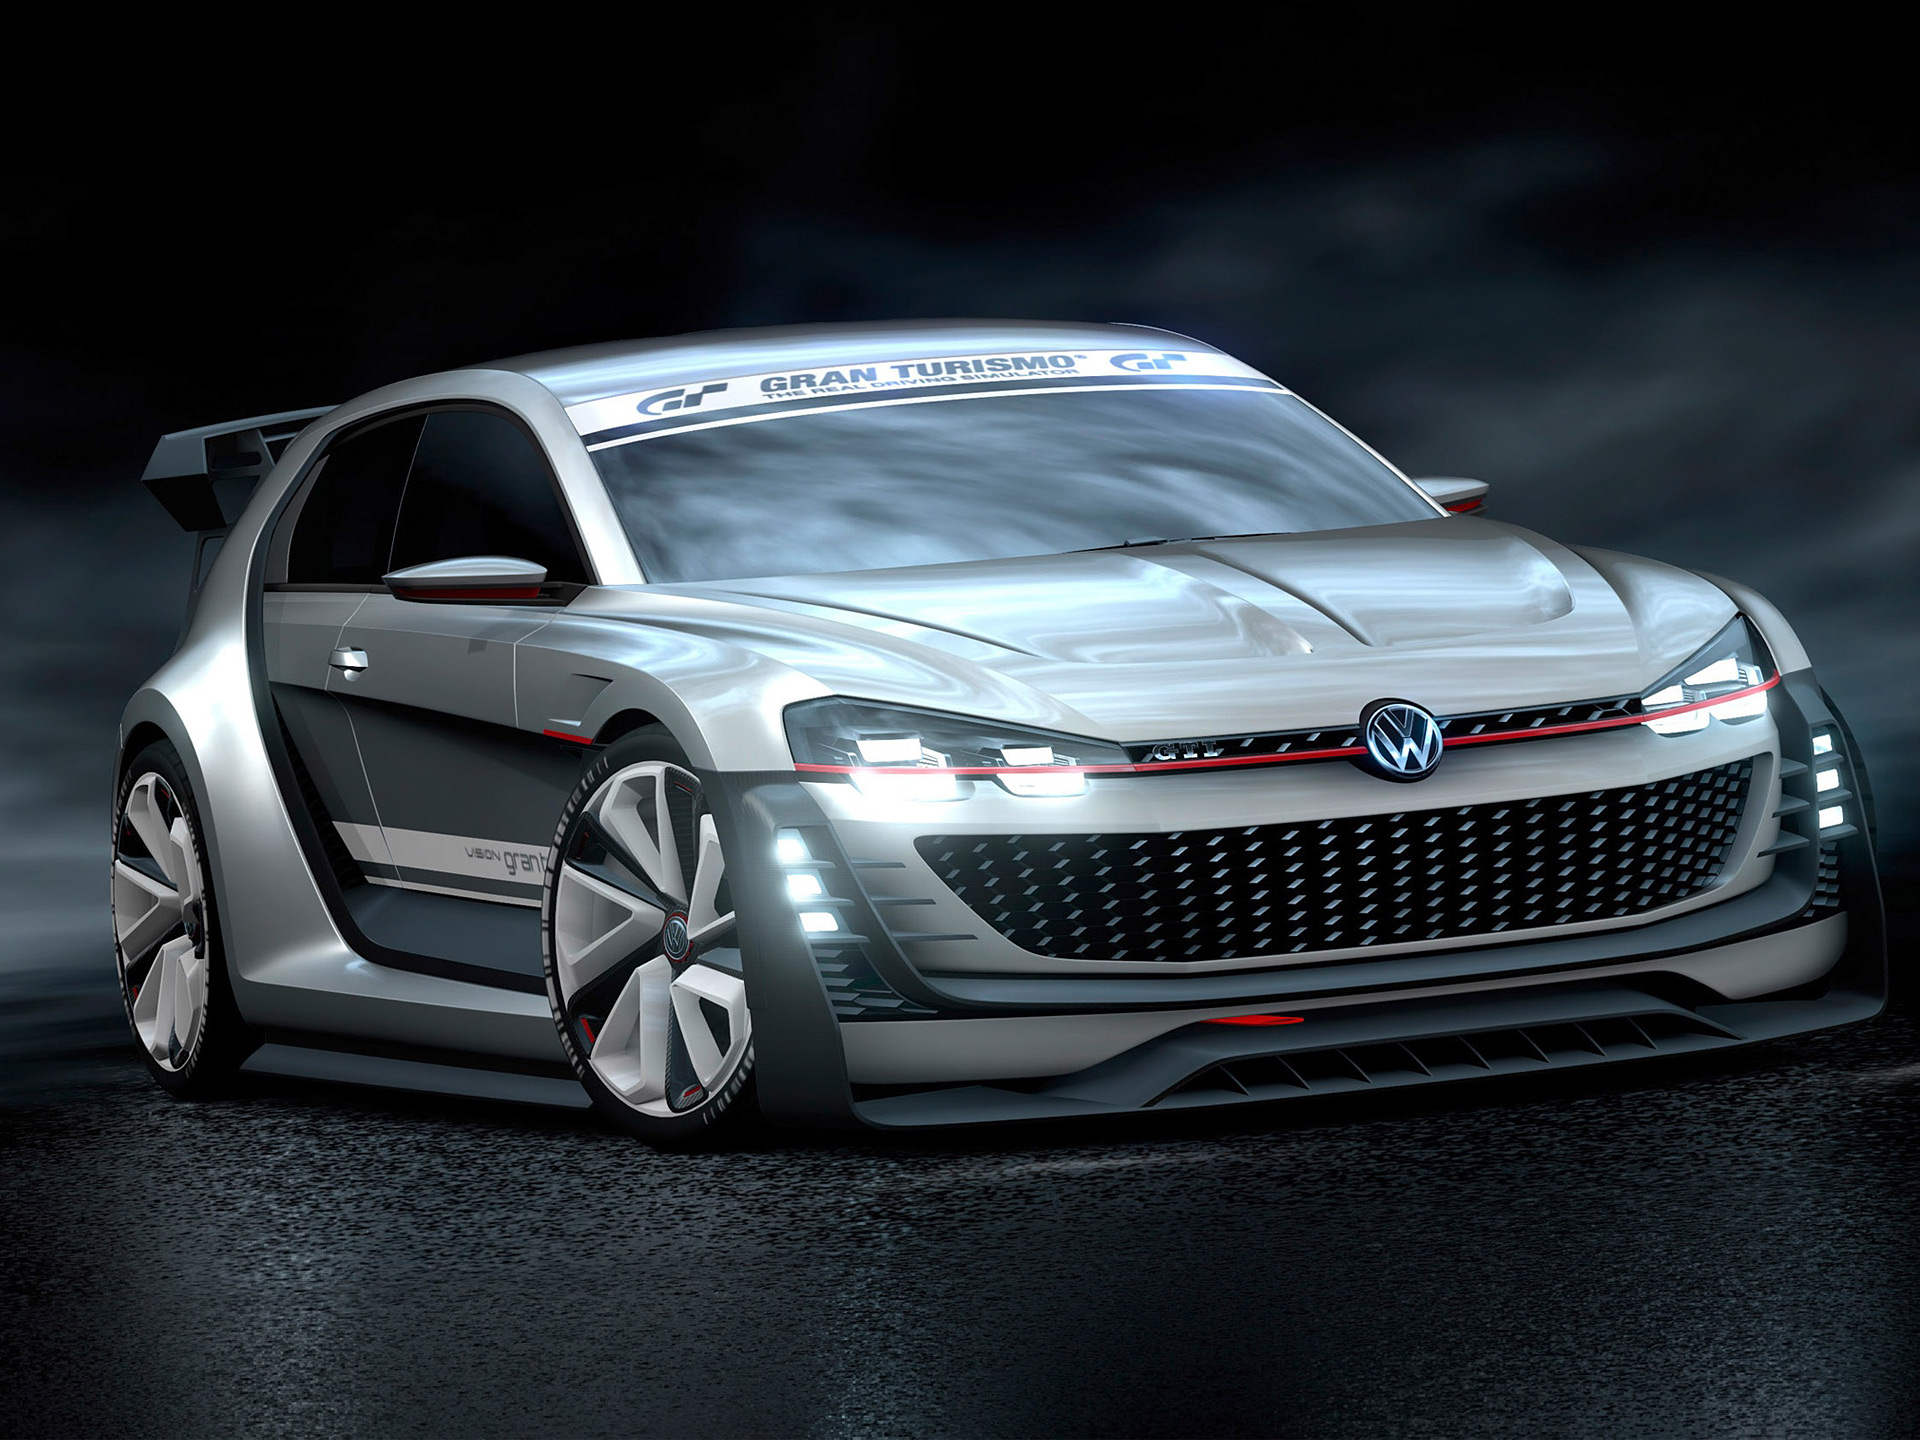  2015 Volkswagen GTI Supersport Vision Gran Turismo Concept Wallpaper.